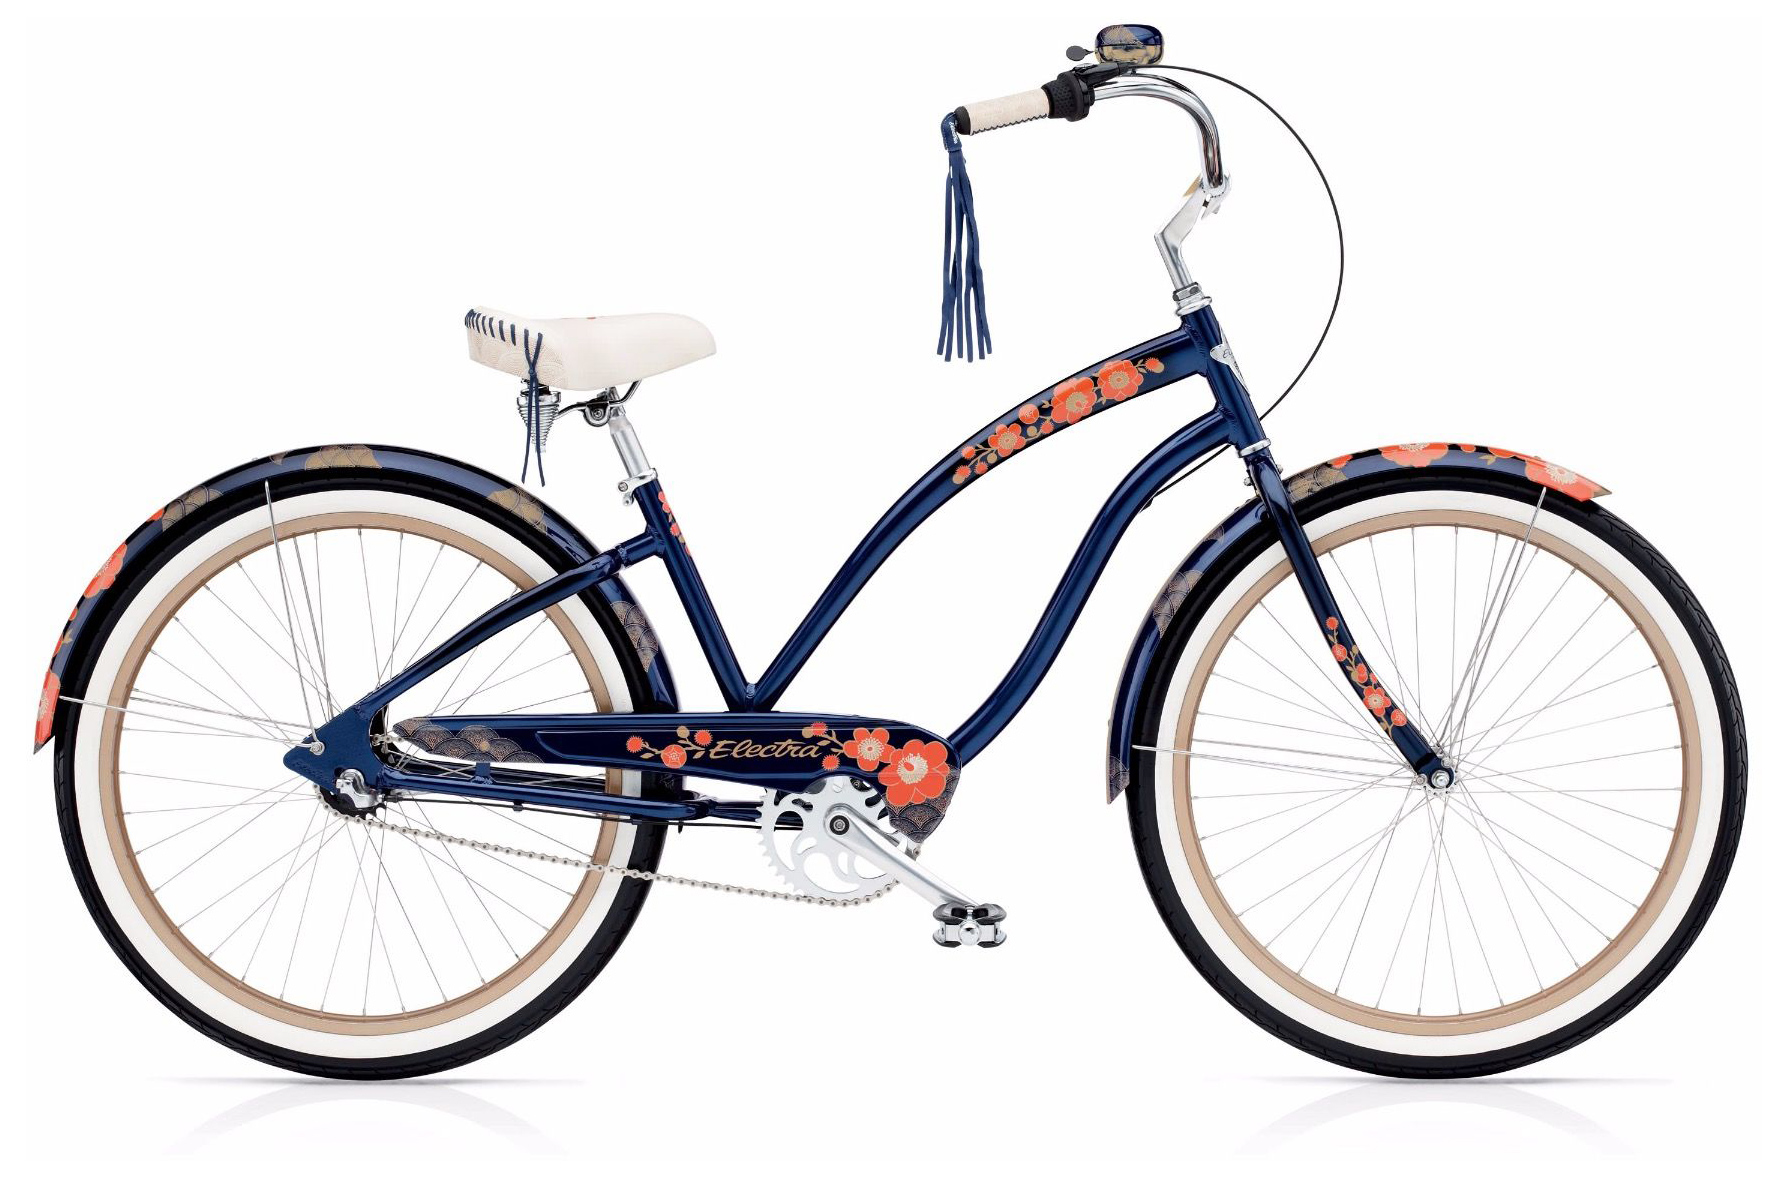  Велосипед Electra Hanami 3i 2019